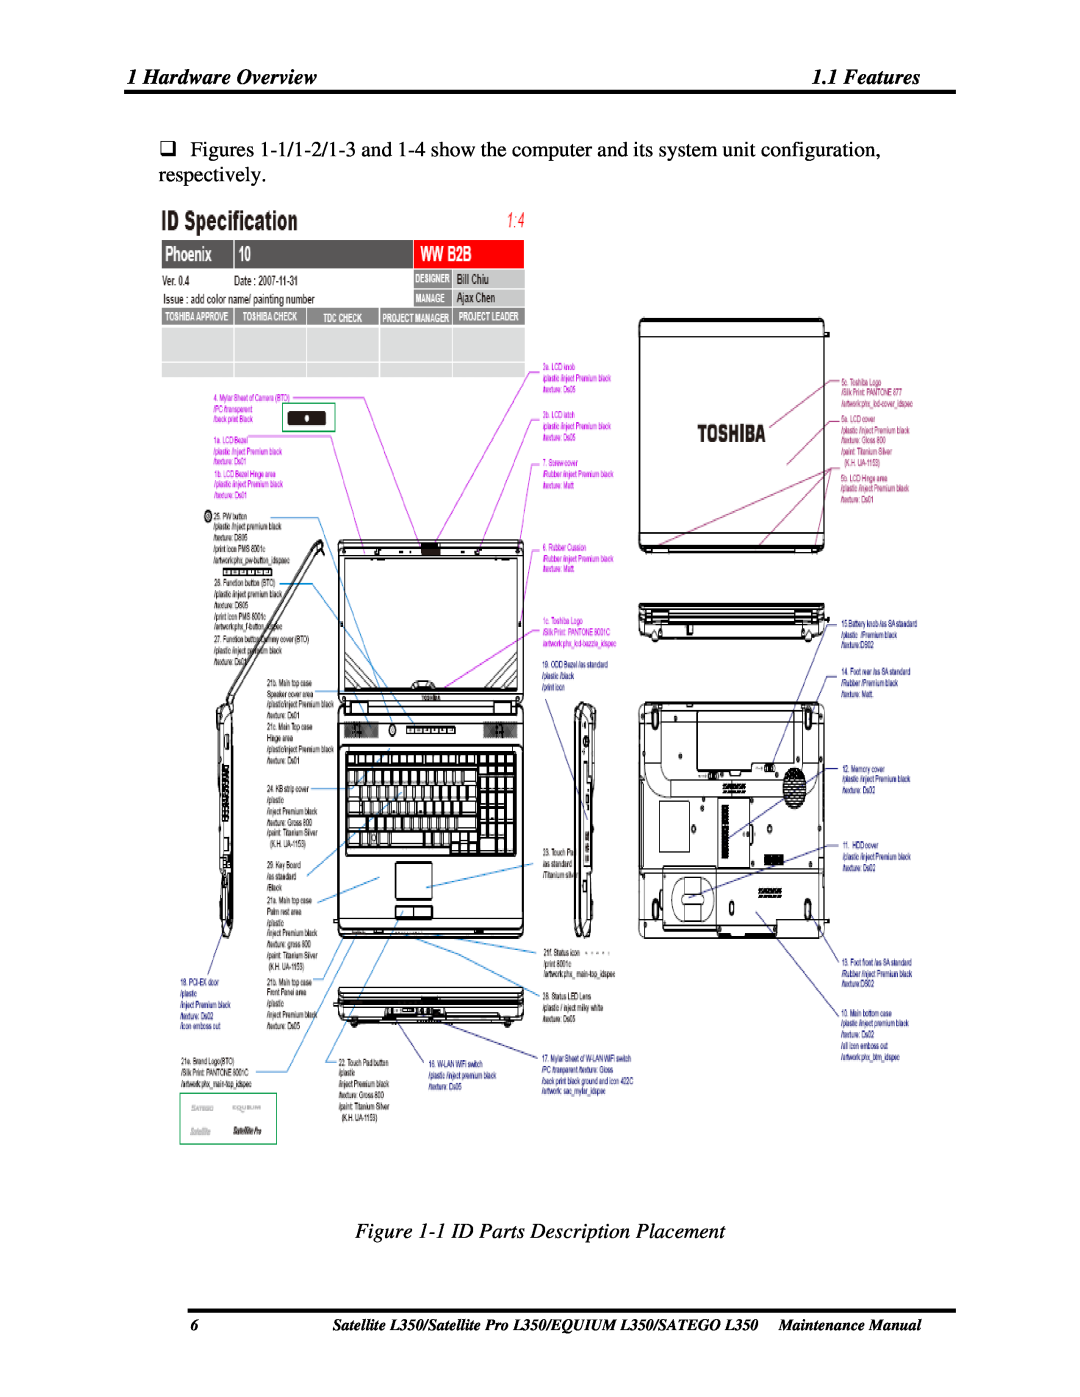 Toshiba PSLD1X, PSLD2X, PSLD3X manual 1 ID Parts Description Placement 